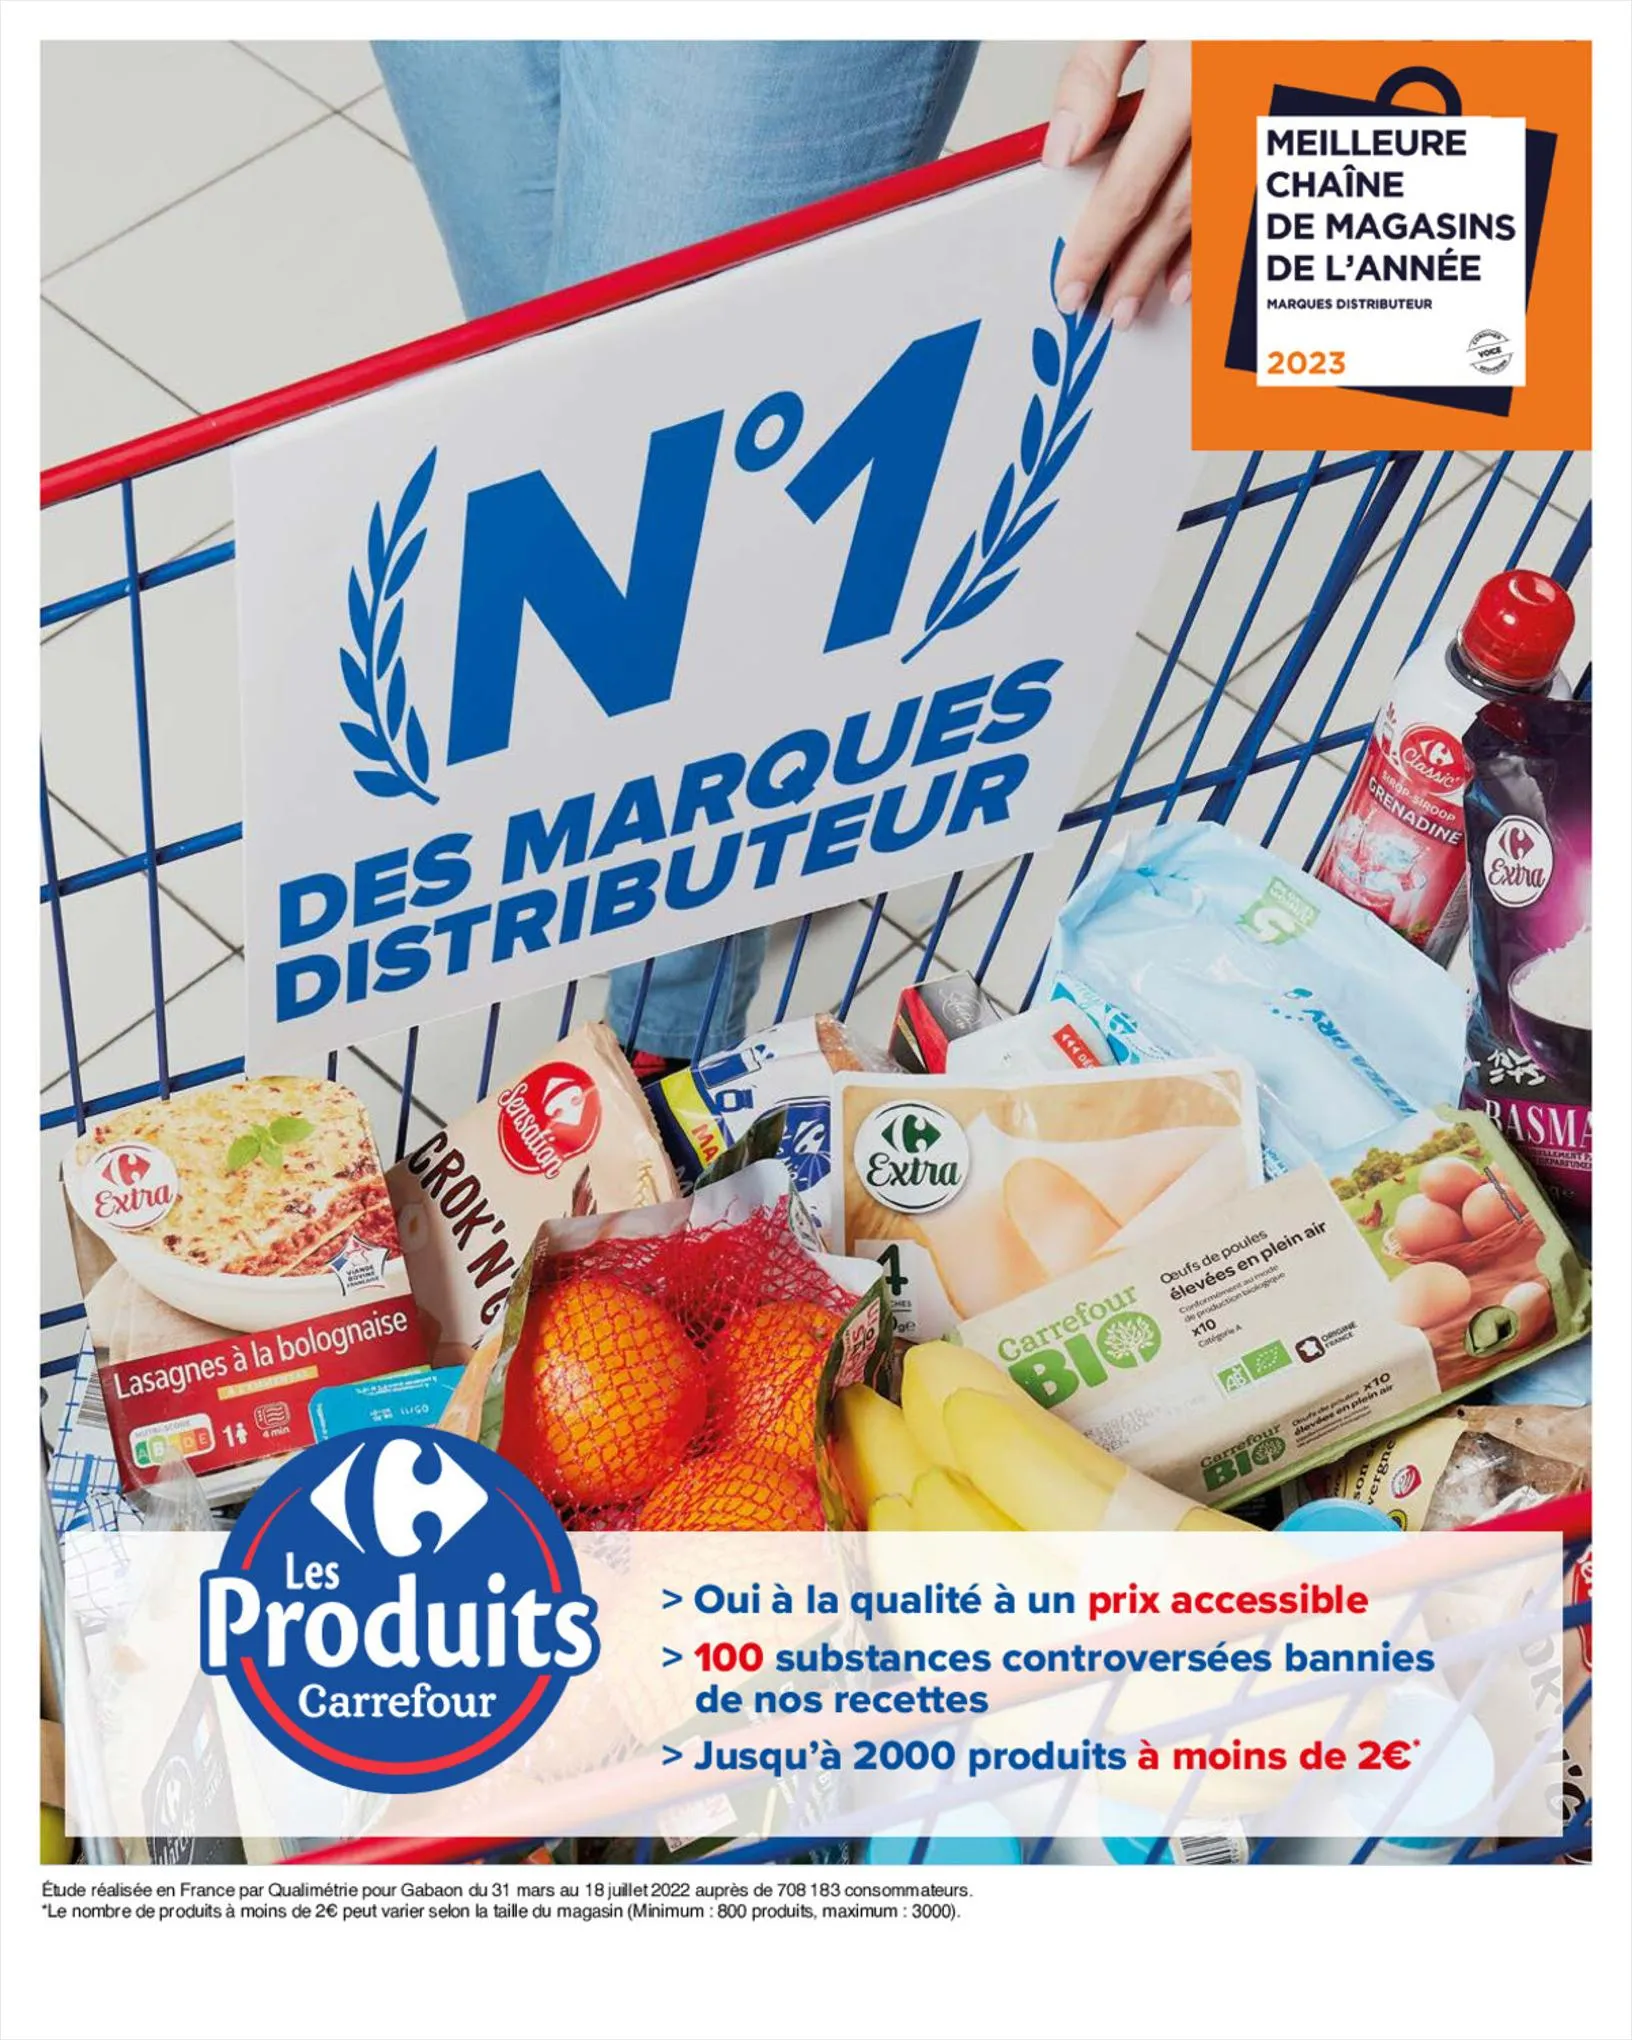 Catalogue Catalogue Carrefour Drive, page 00005